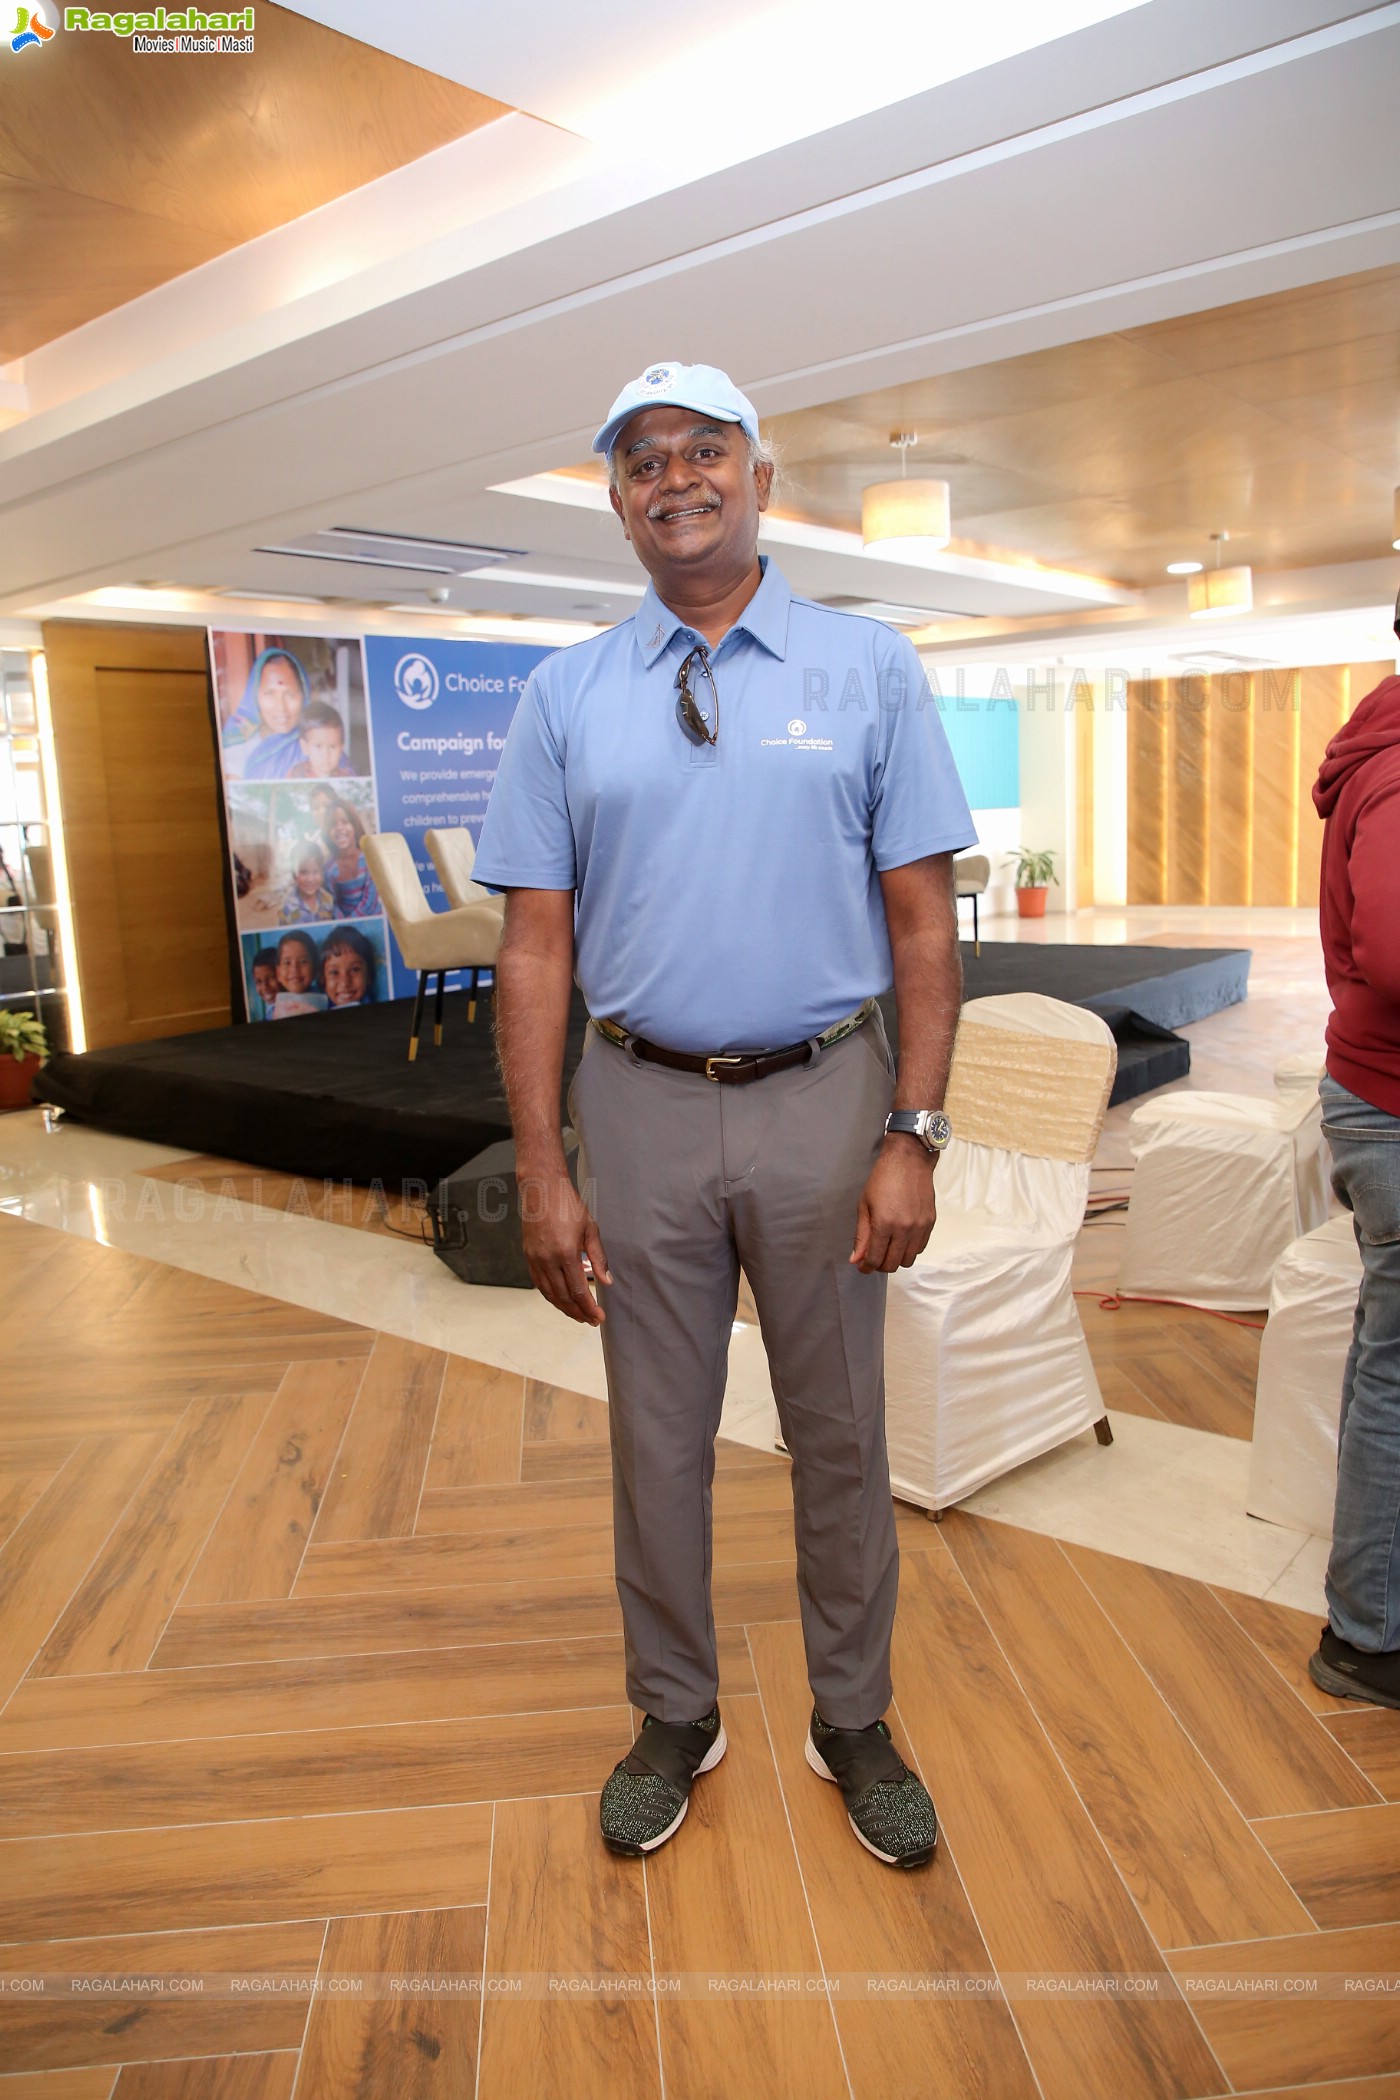 Choice Foundation's 3rd Edition Annual Golf Fundraiser Event Press Meet at Hyderabad Golf Club